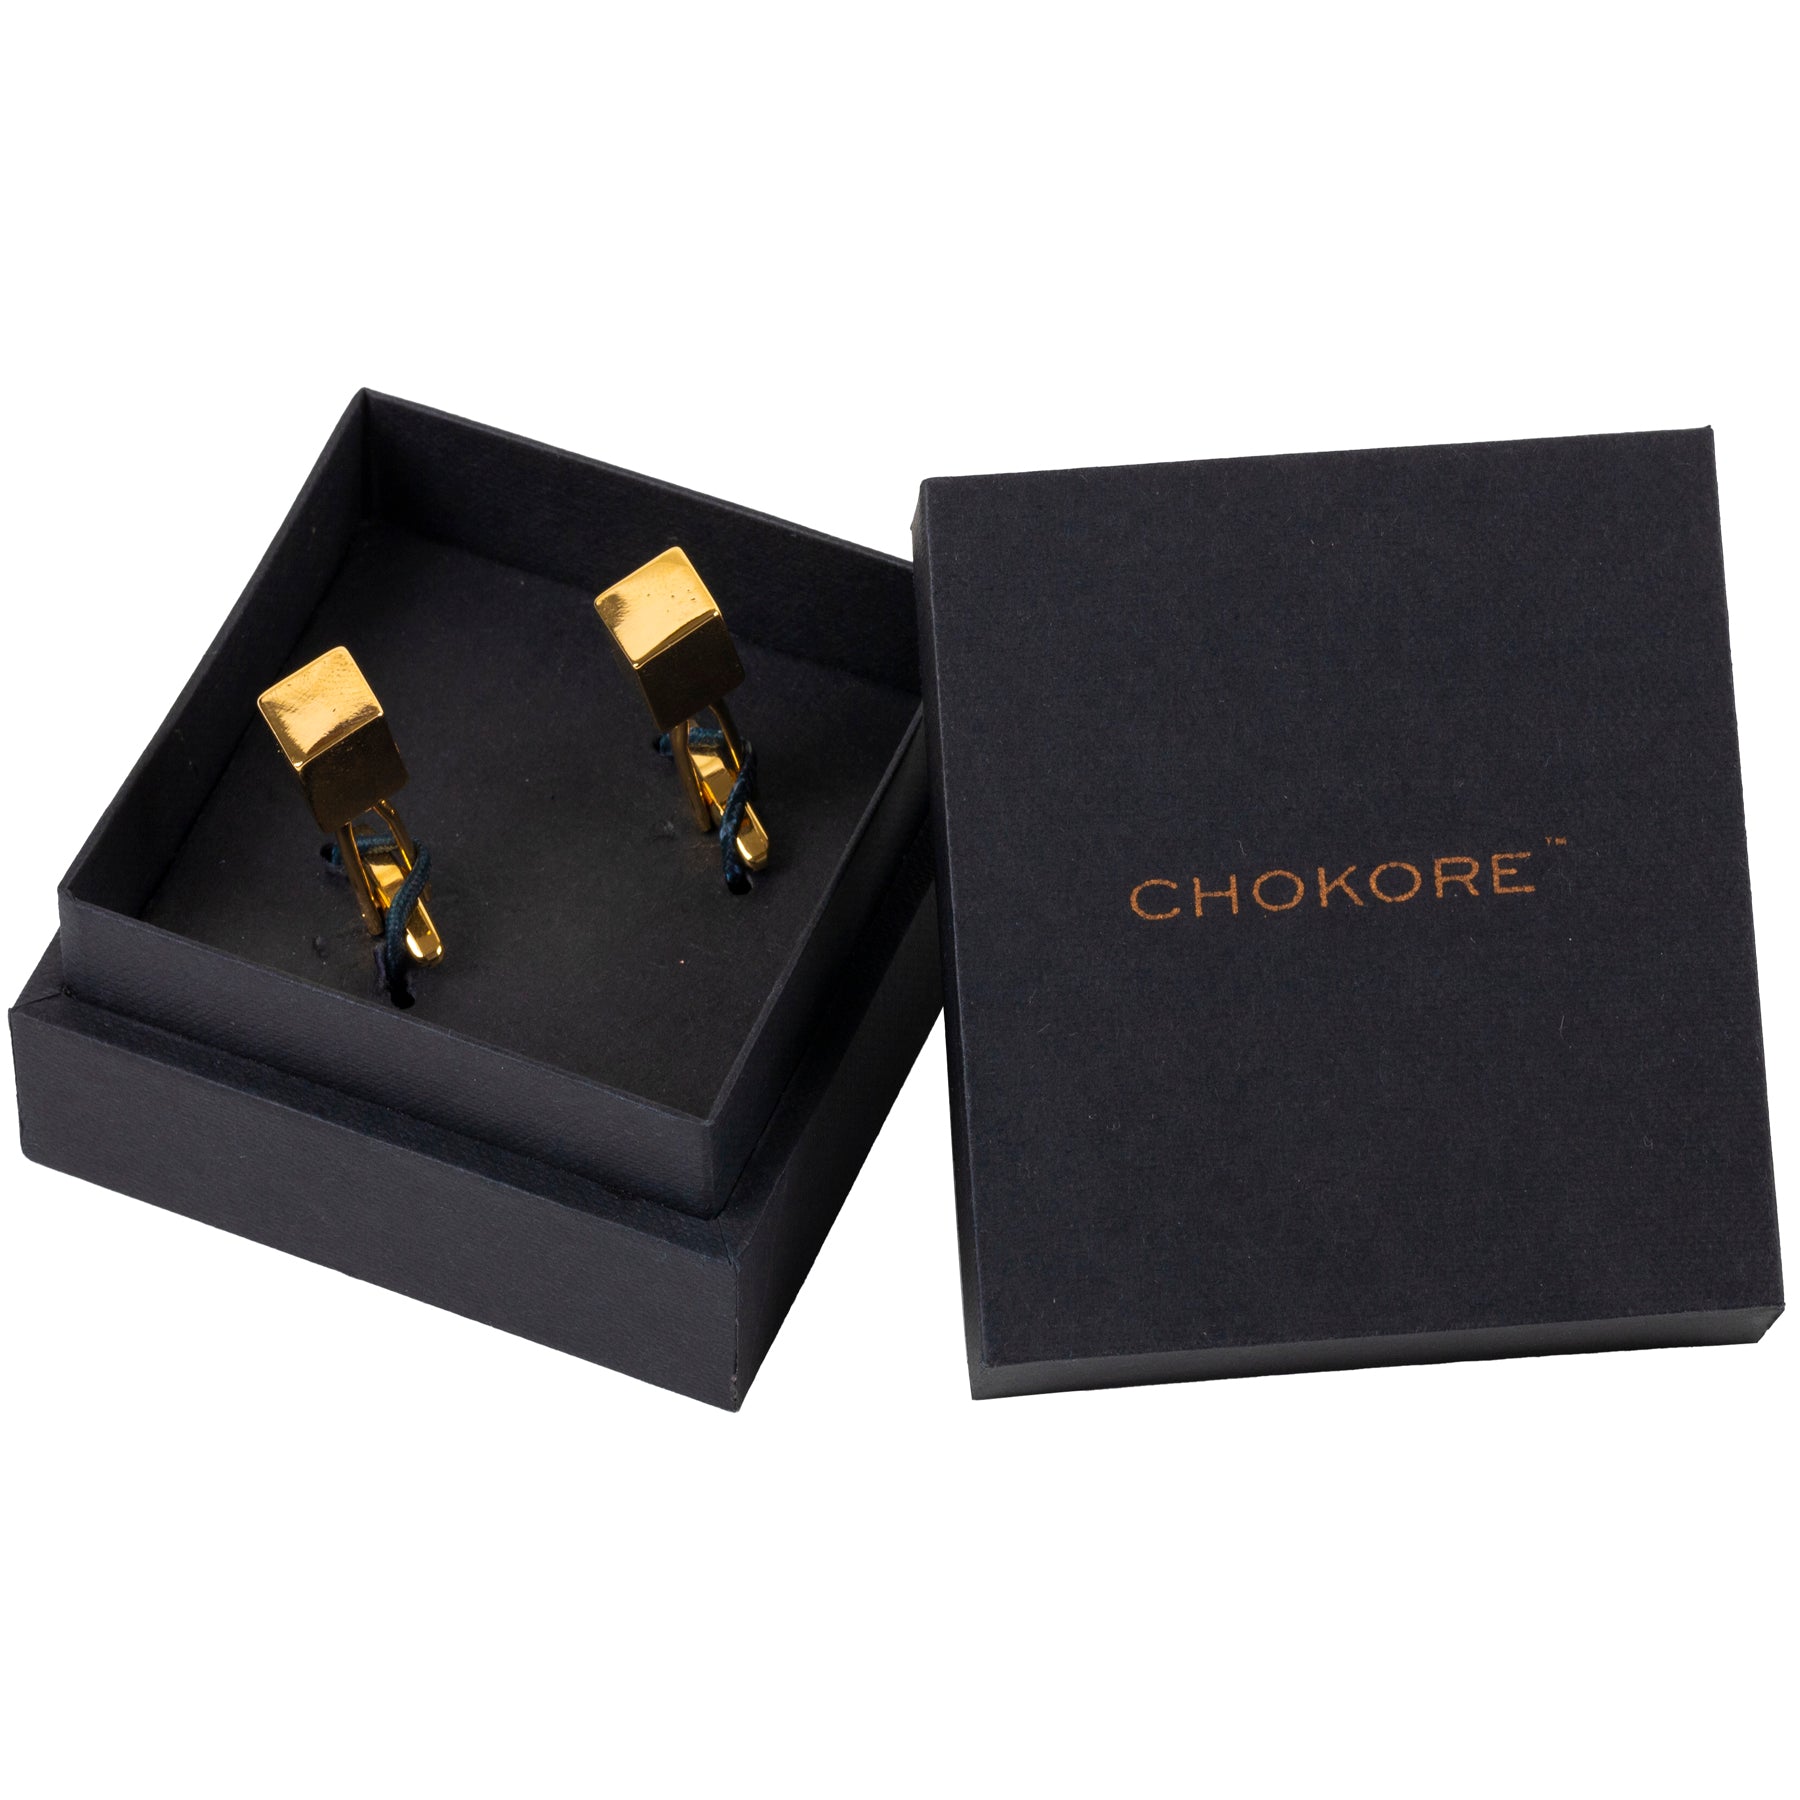 Chokore Gold Square Shaped Premium Range of Cufflinks